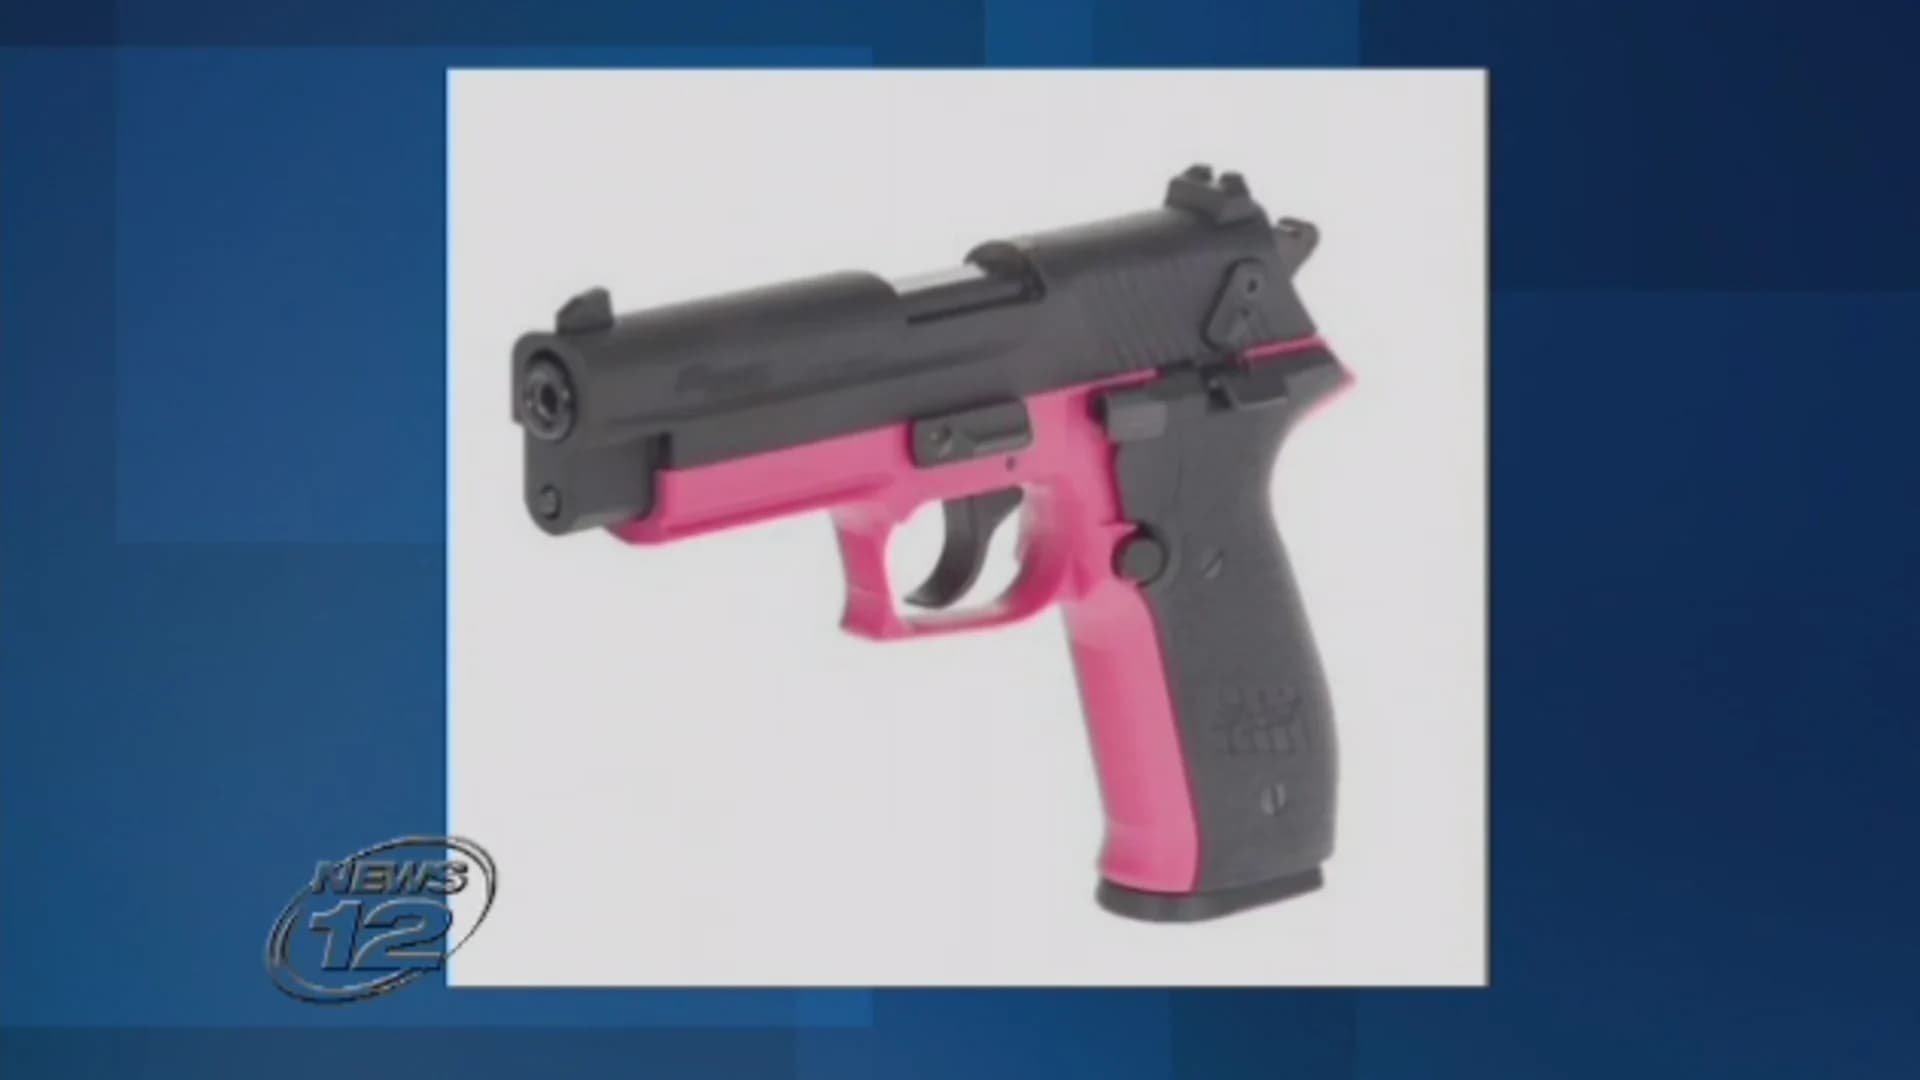 Authorities probe BB gun incident at elementary school